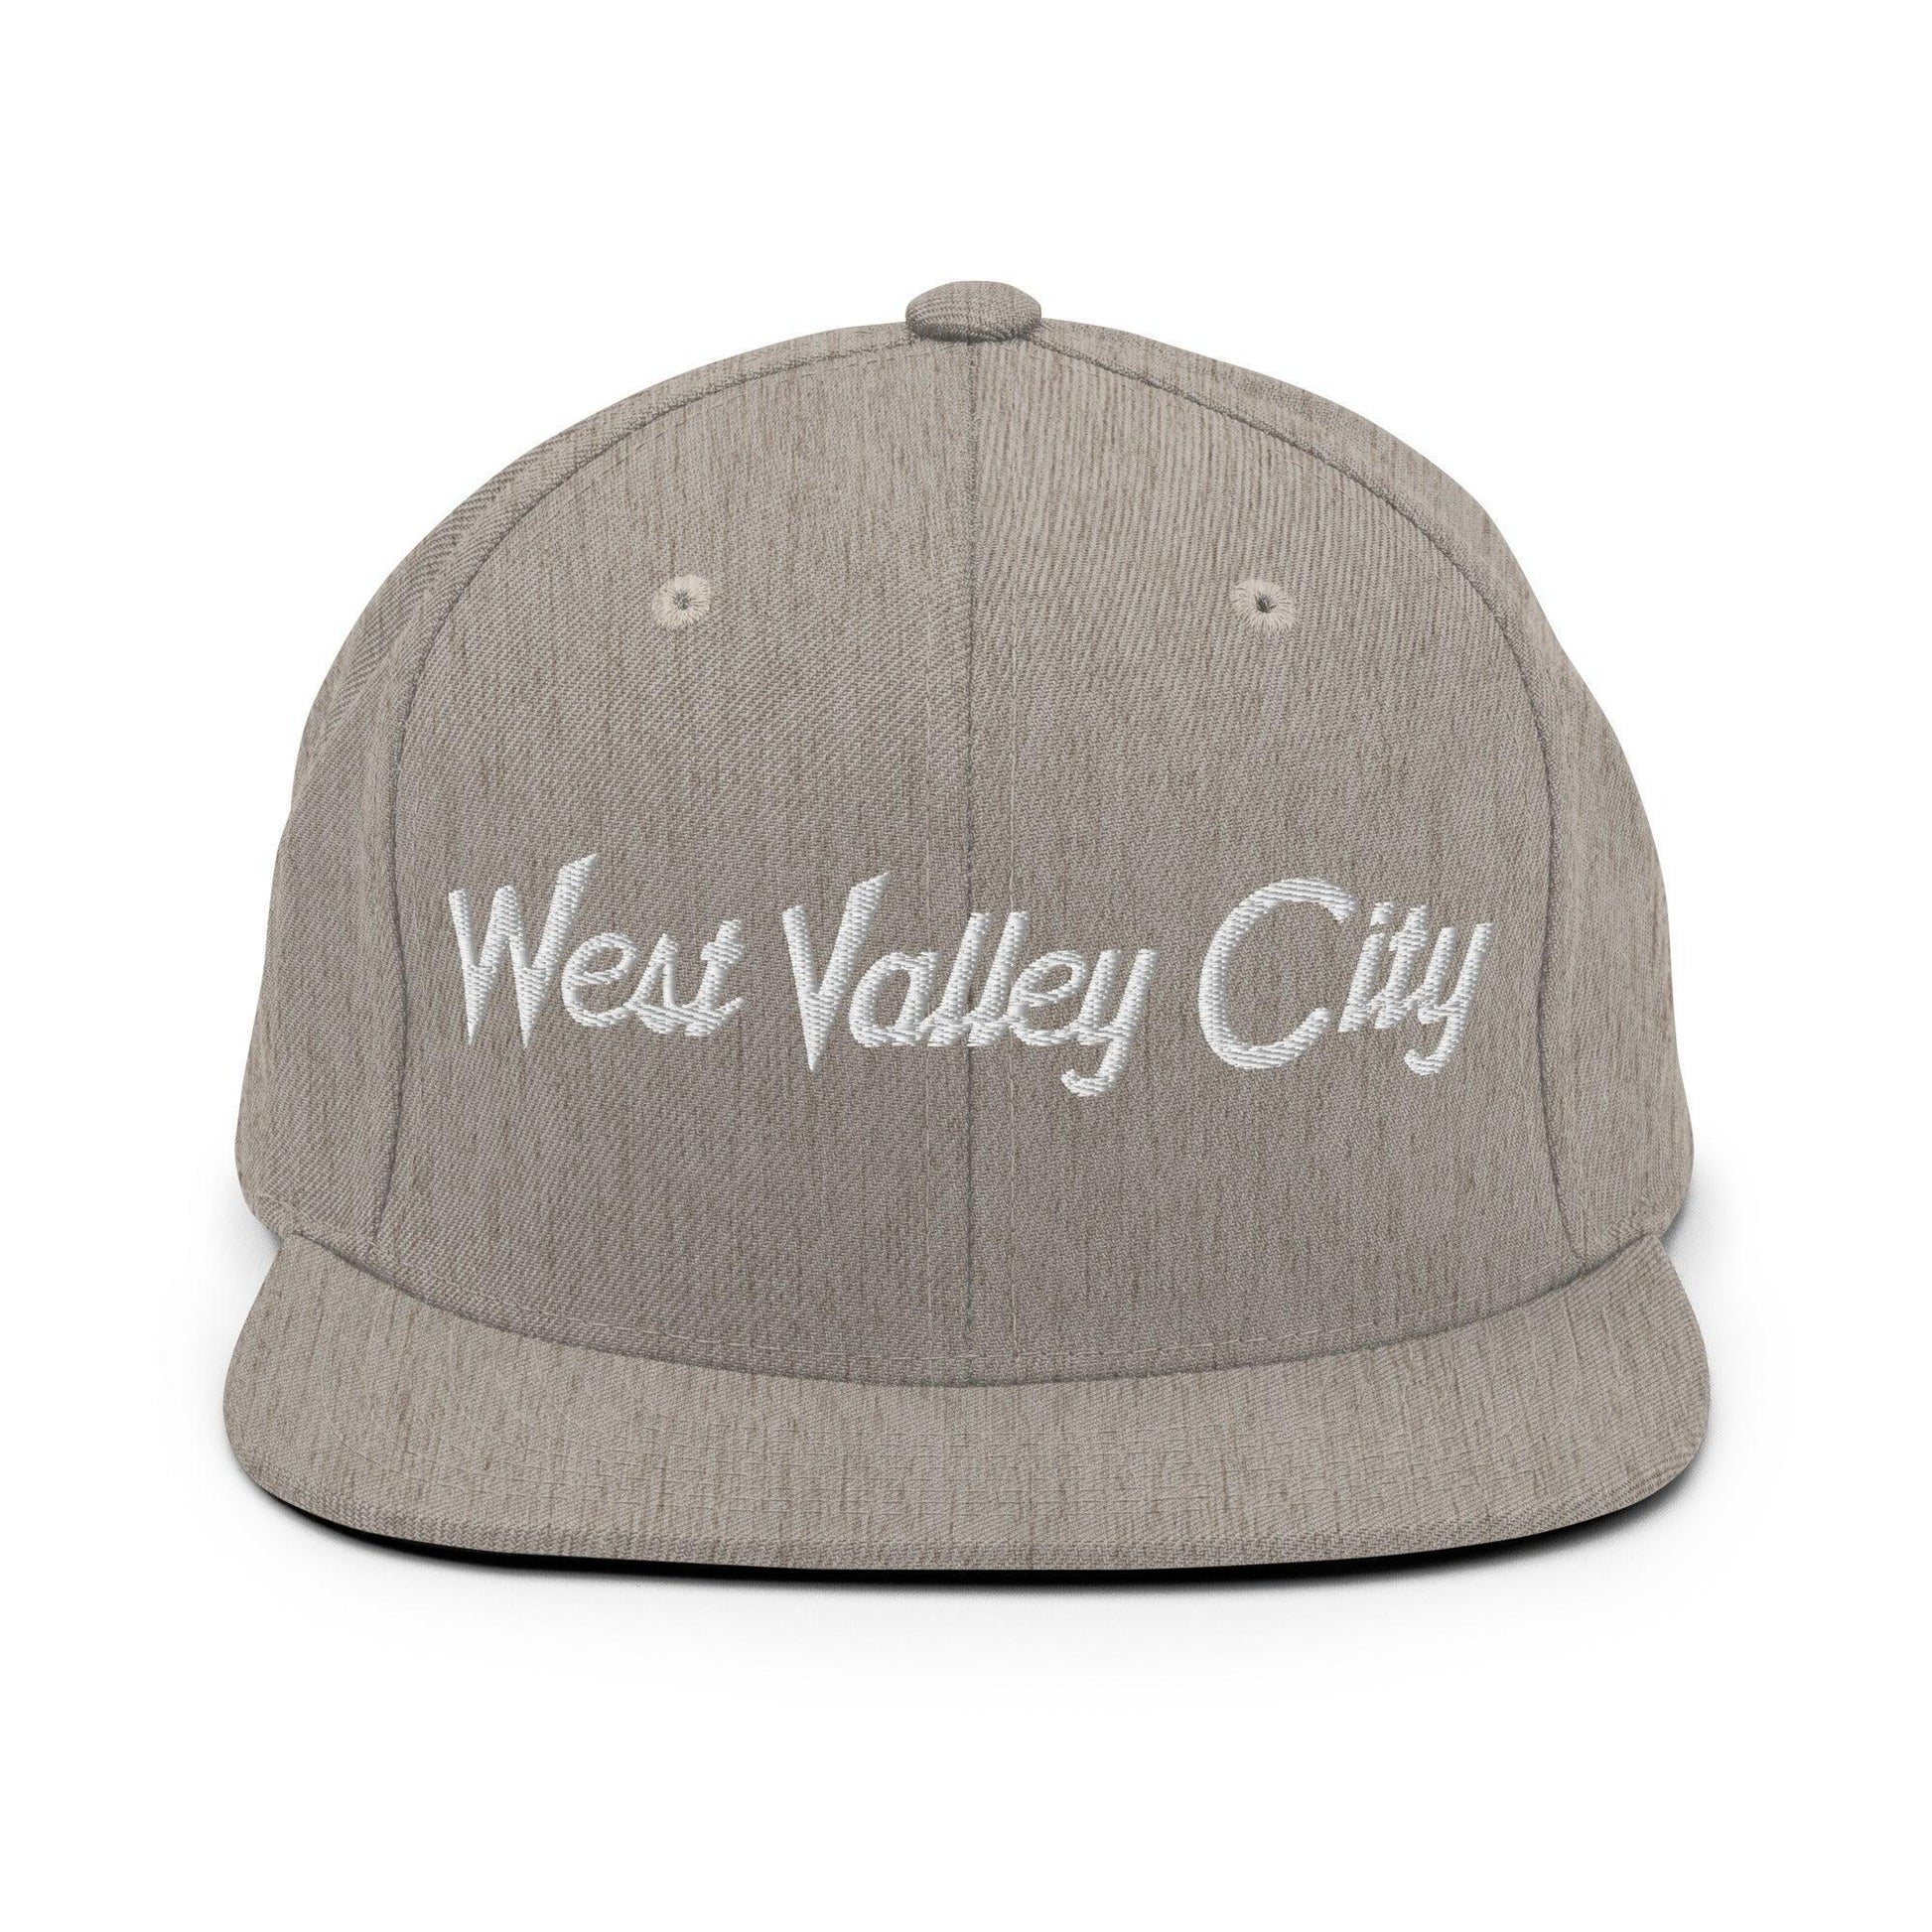 West Valley City Script Snapback Hat Heather Grey